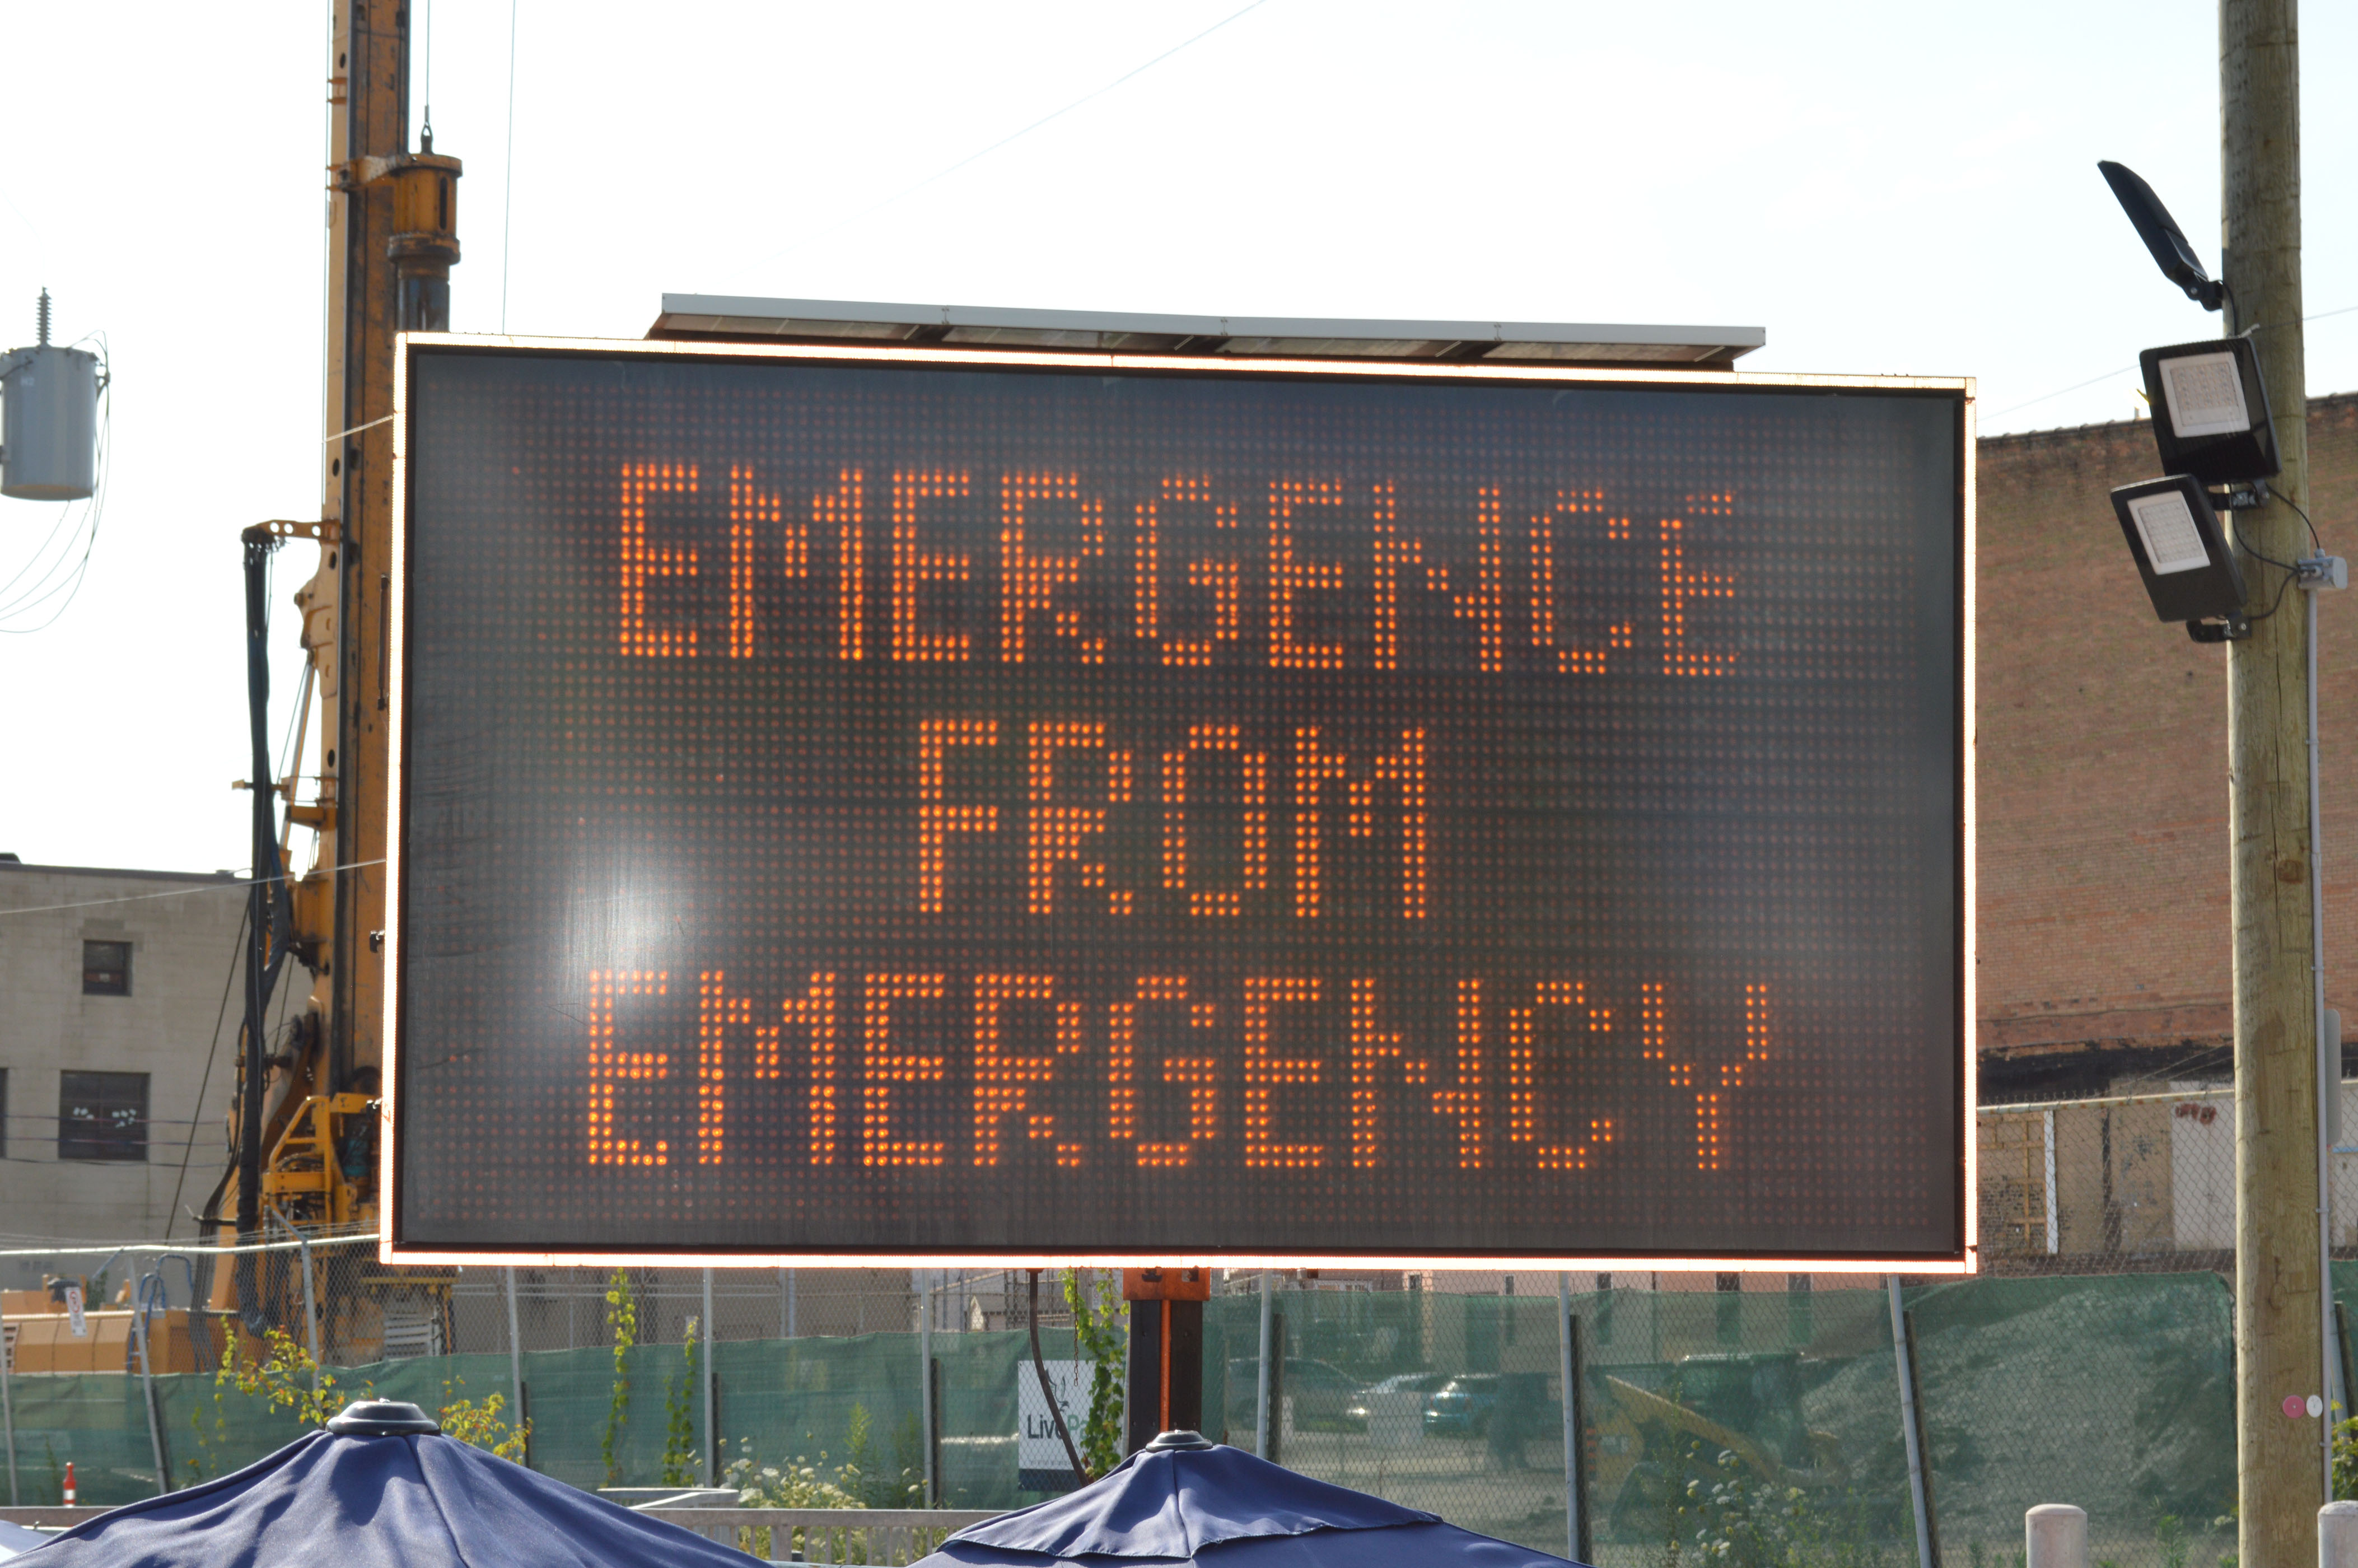 Emergence from Emergency